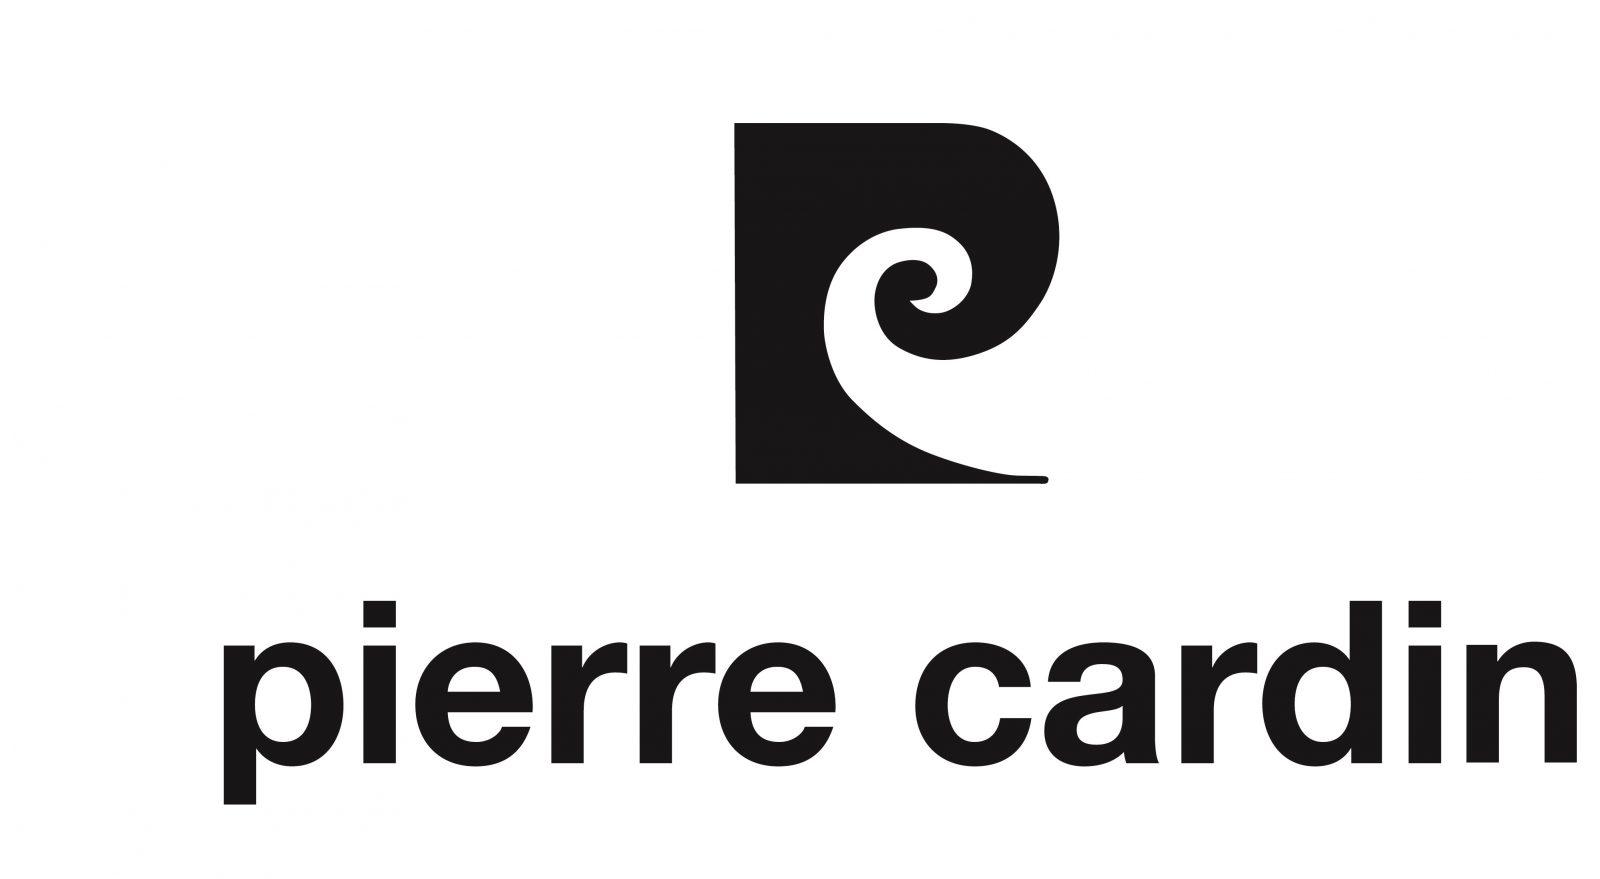 Логотип бренда Pierre Cardin - История бренда Pierre Cardin